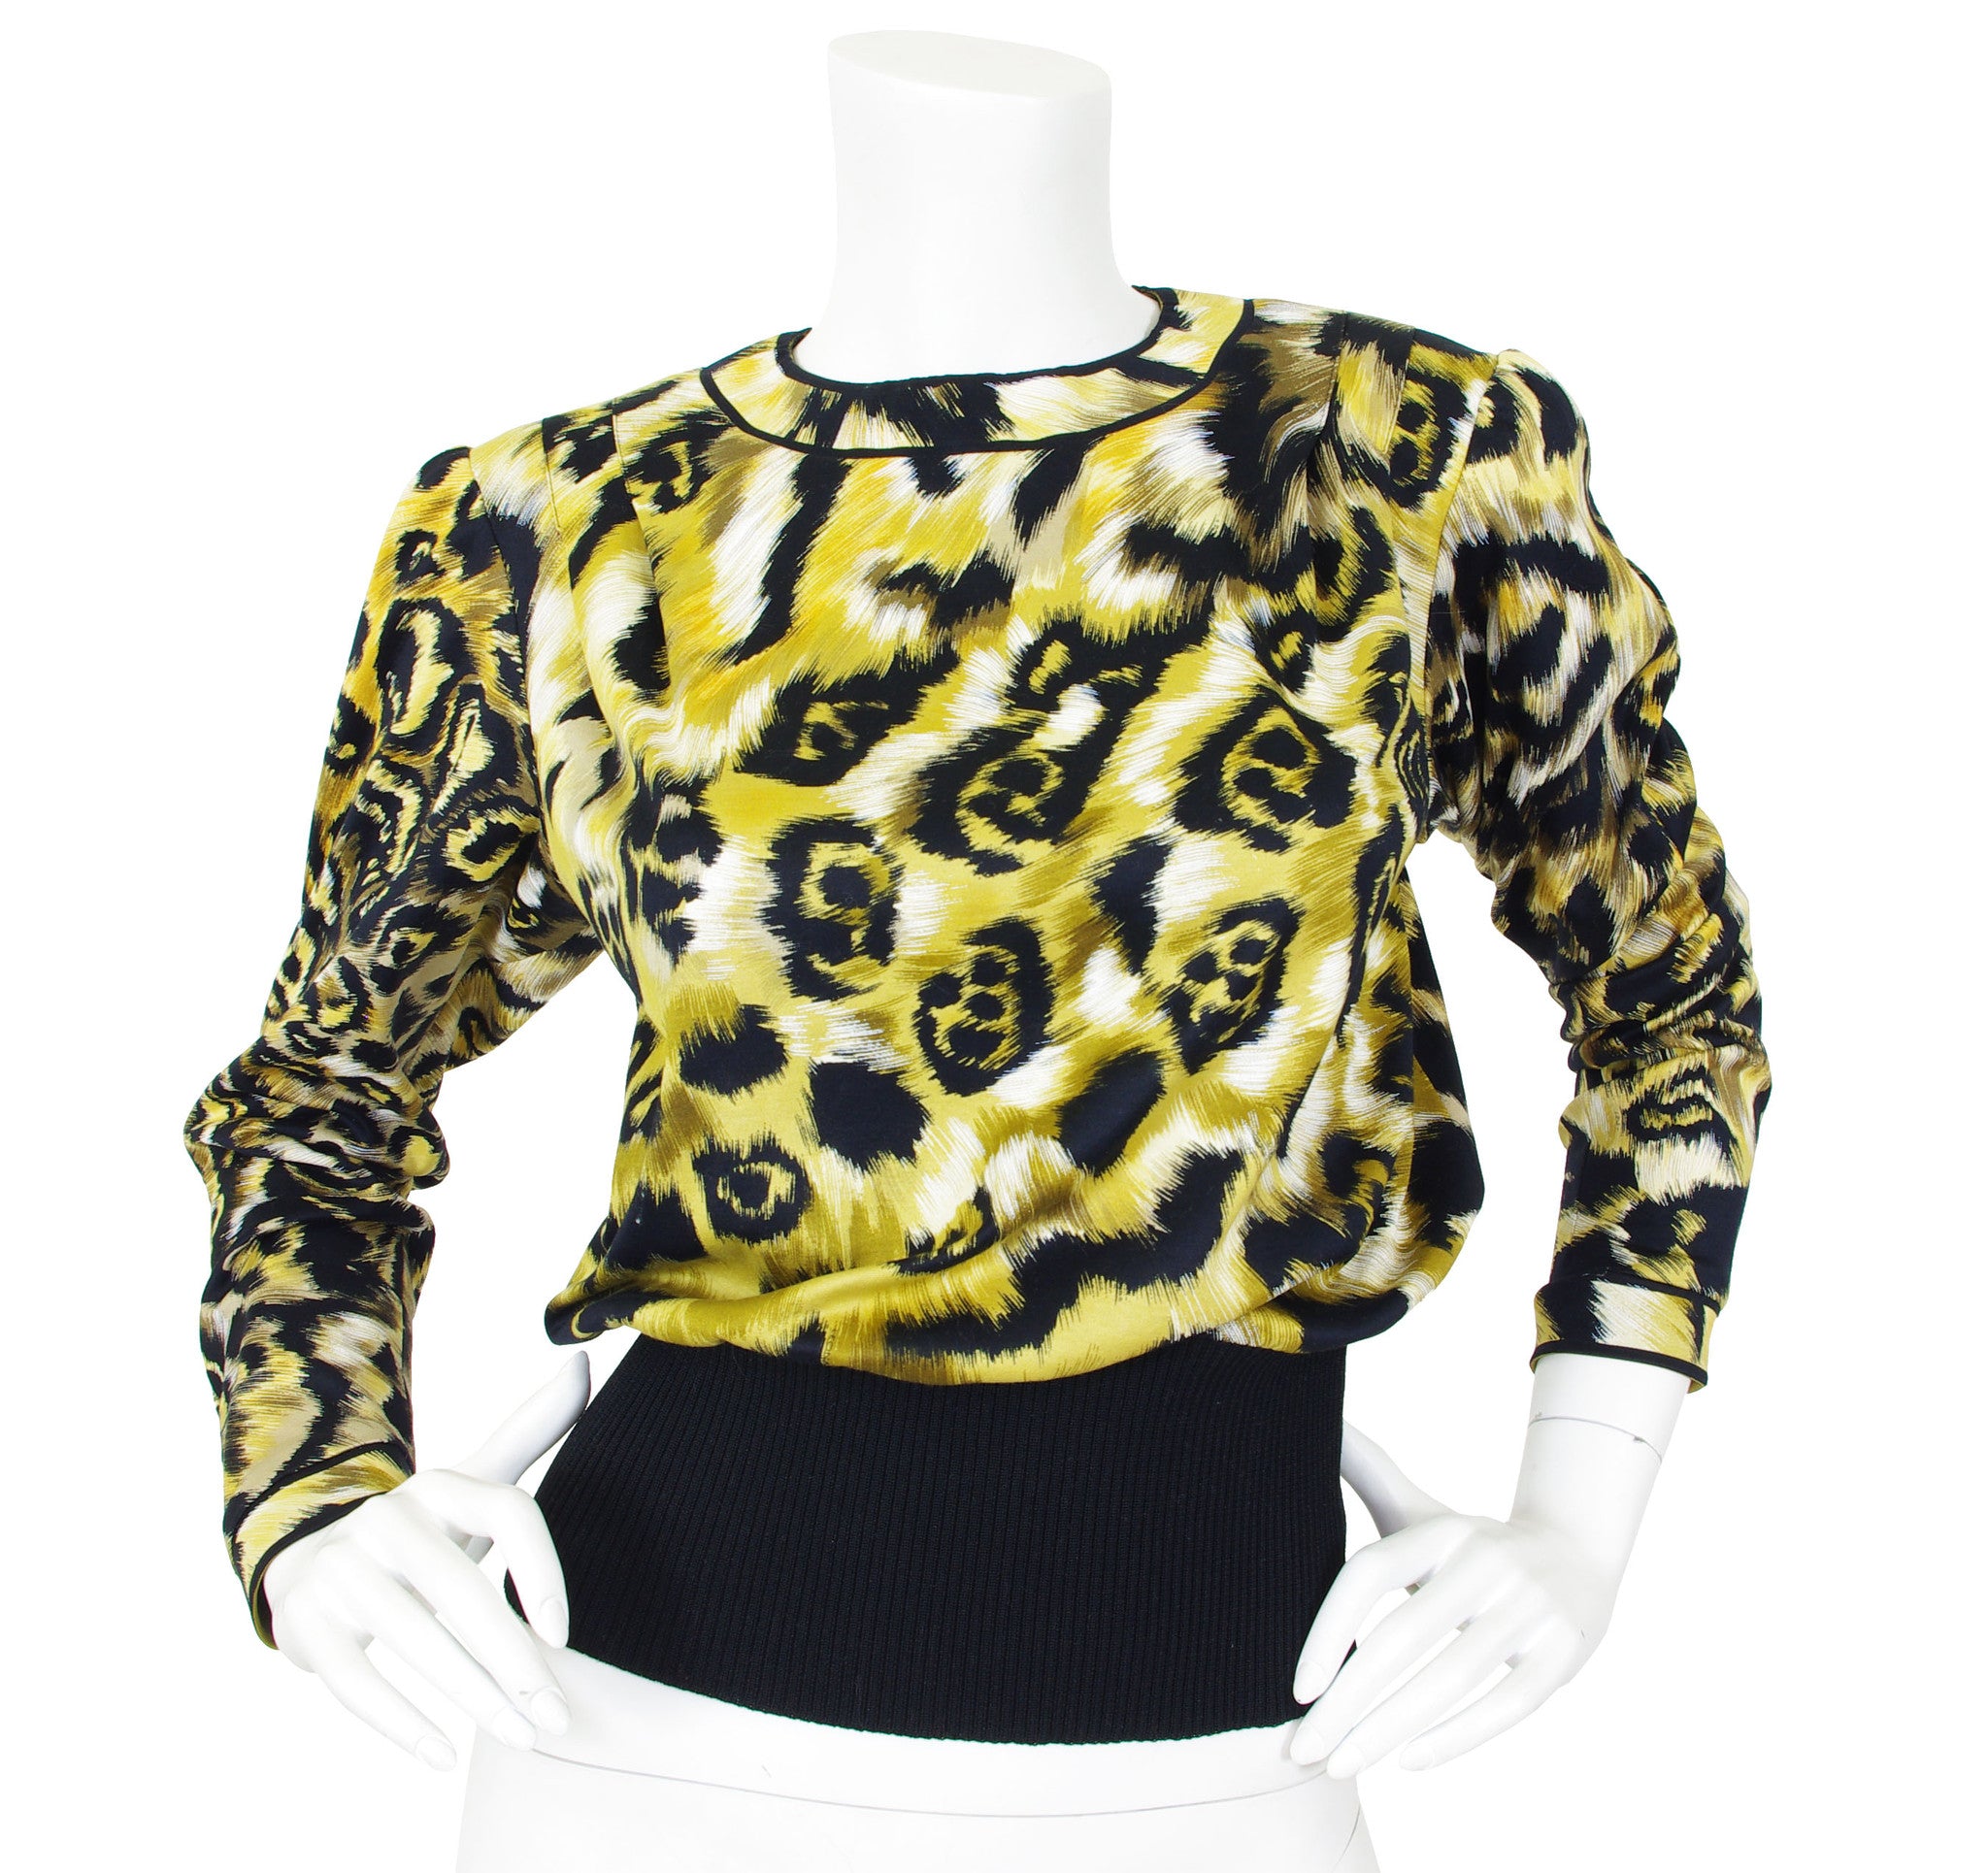 1980s Leopard Print Cotton Top & Skirt Set